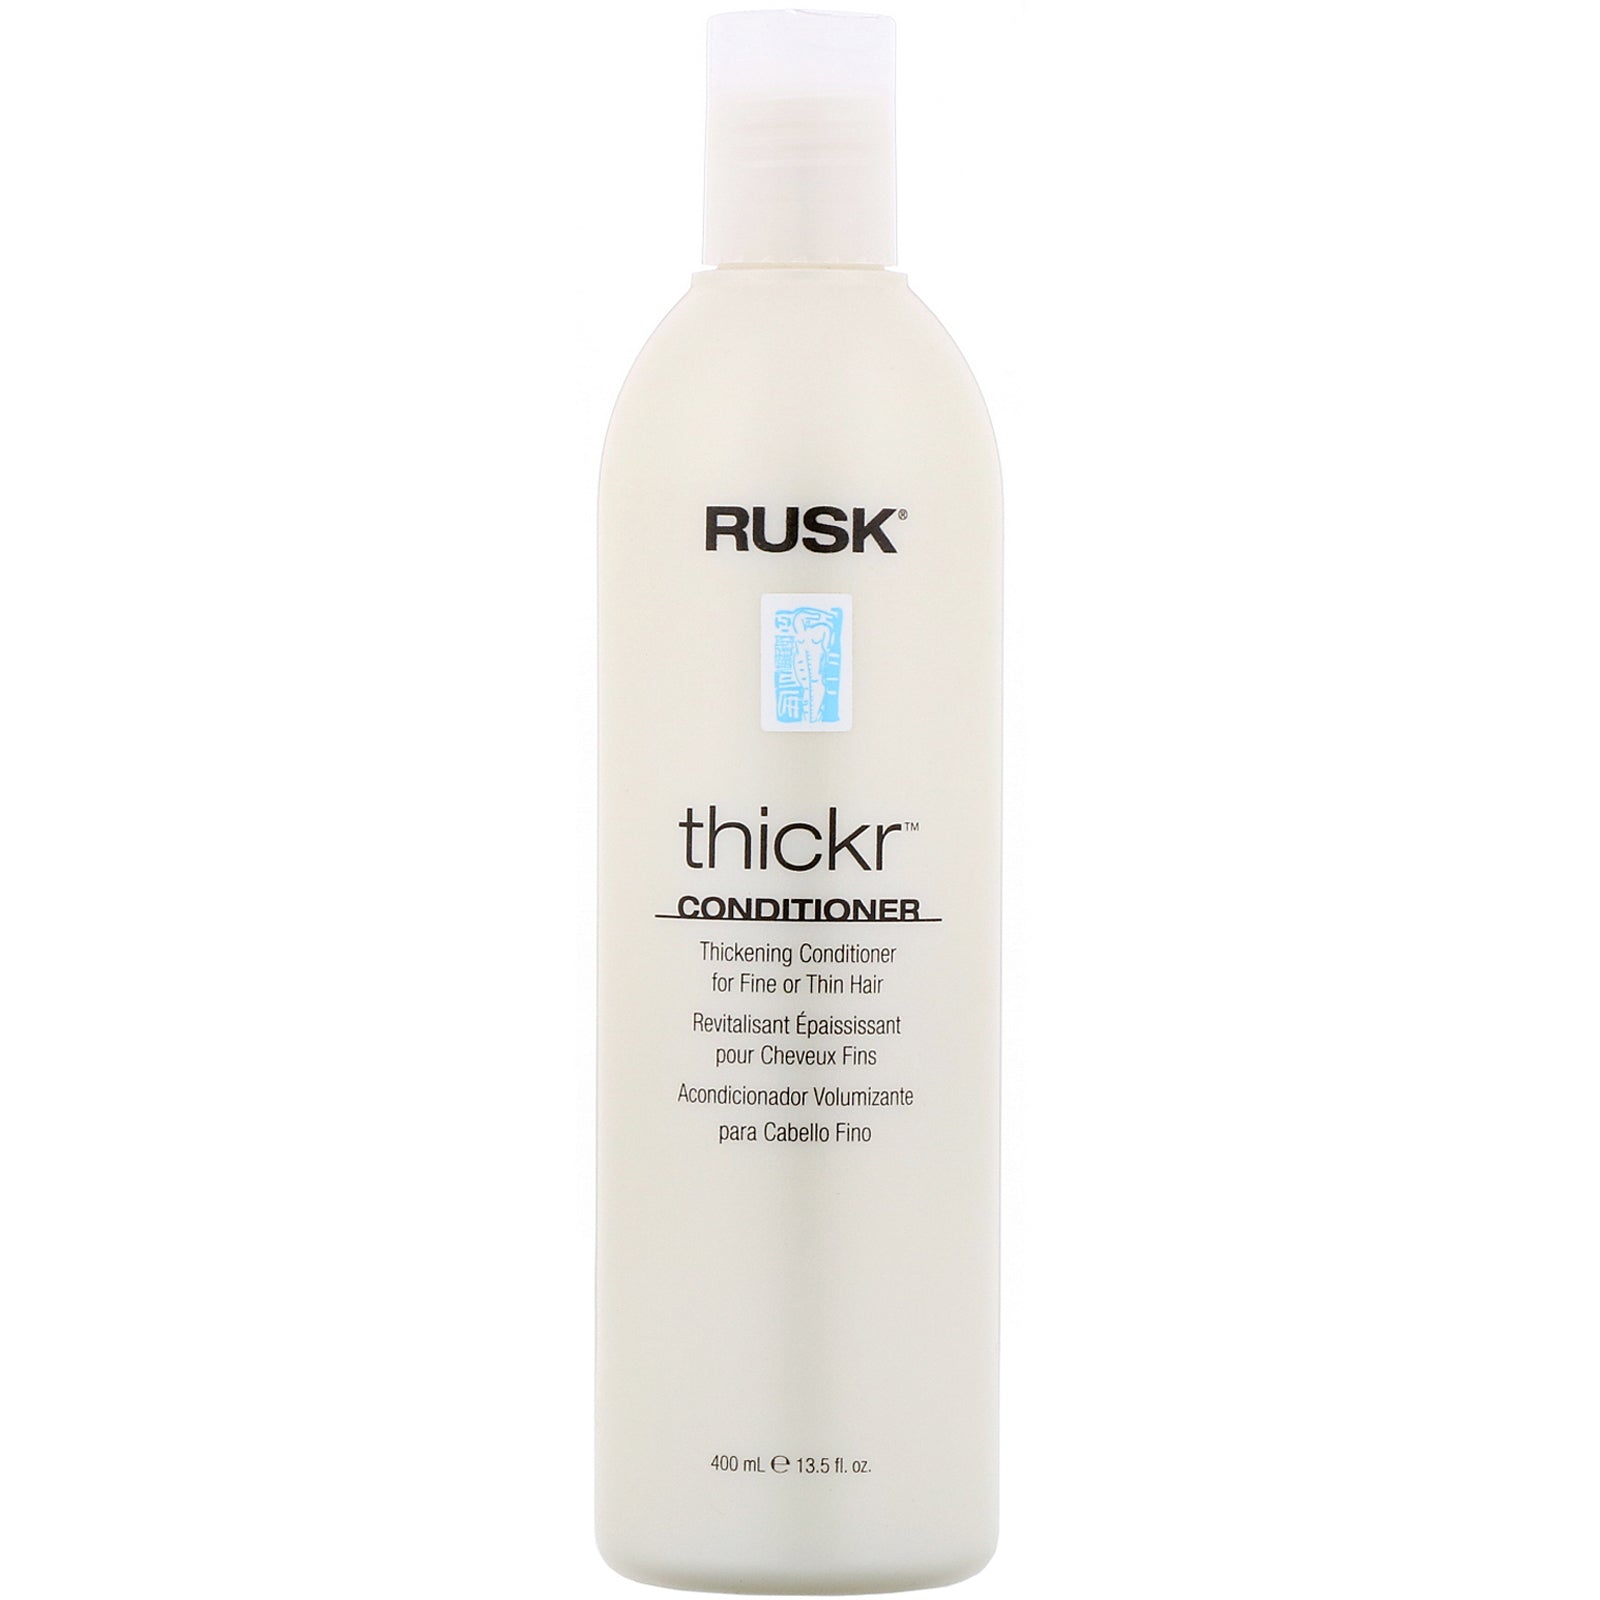 Rusk, Thickr, Conditioner, 13.5 fl oz (400 ml)